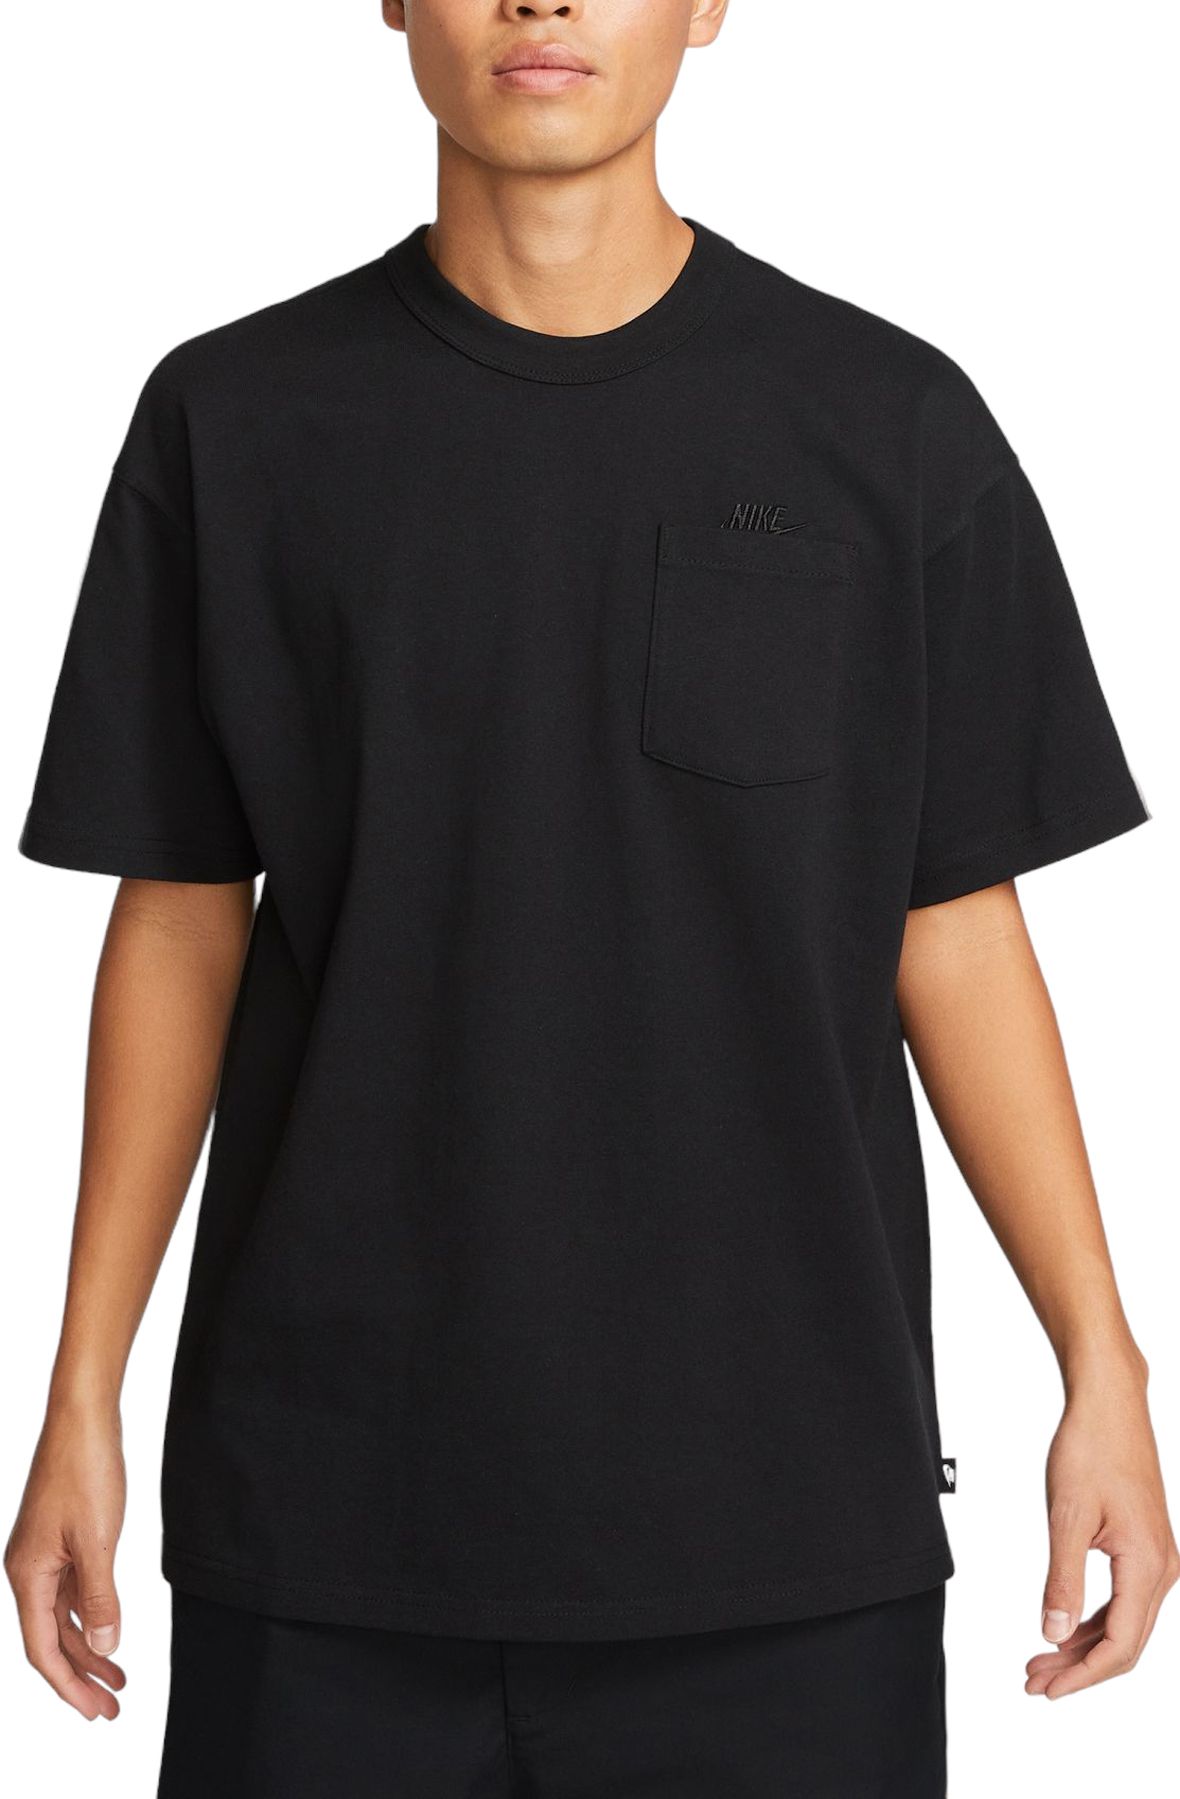 NIKE t-shirt Sportswear Black for boys